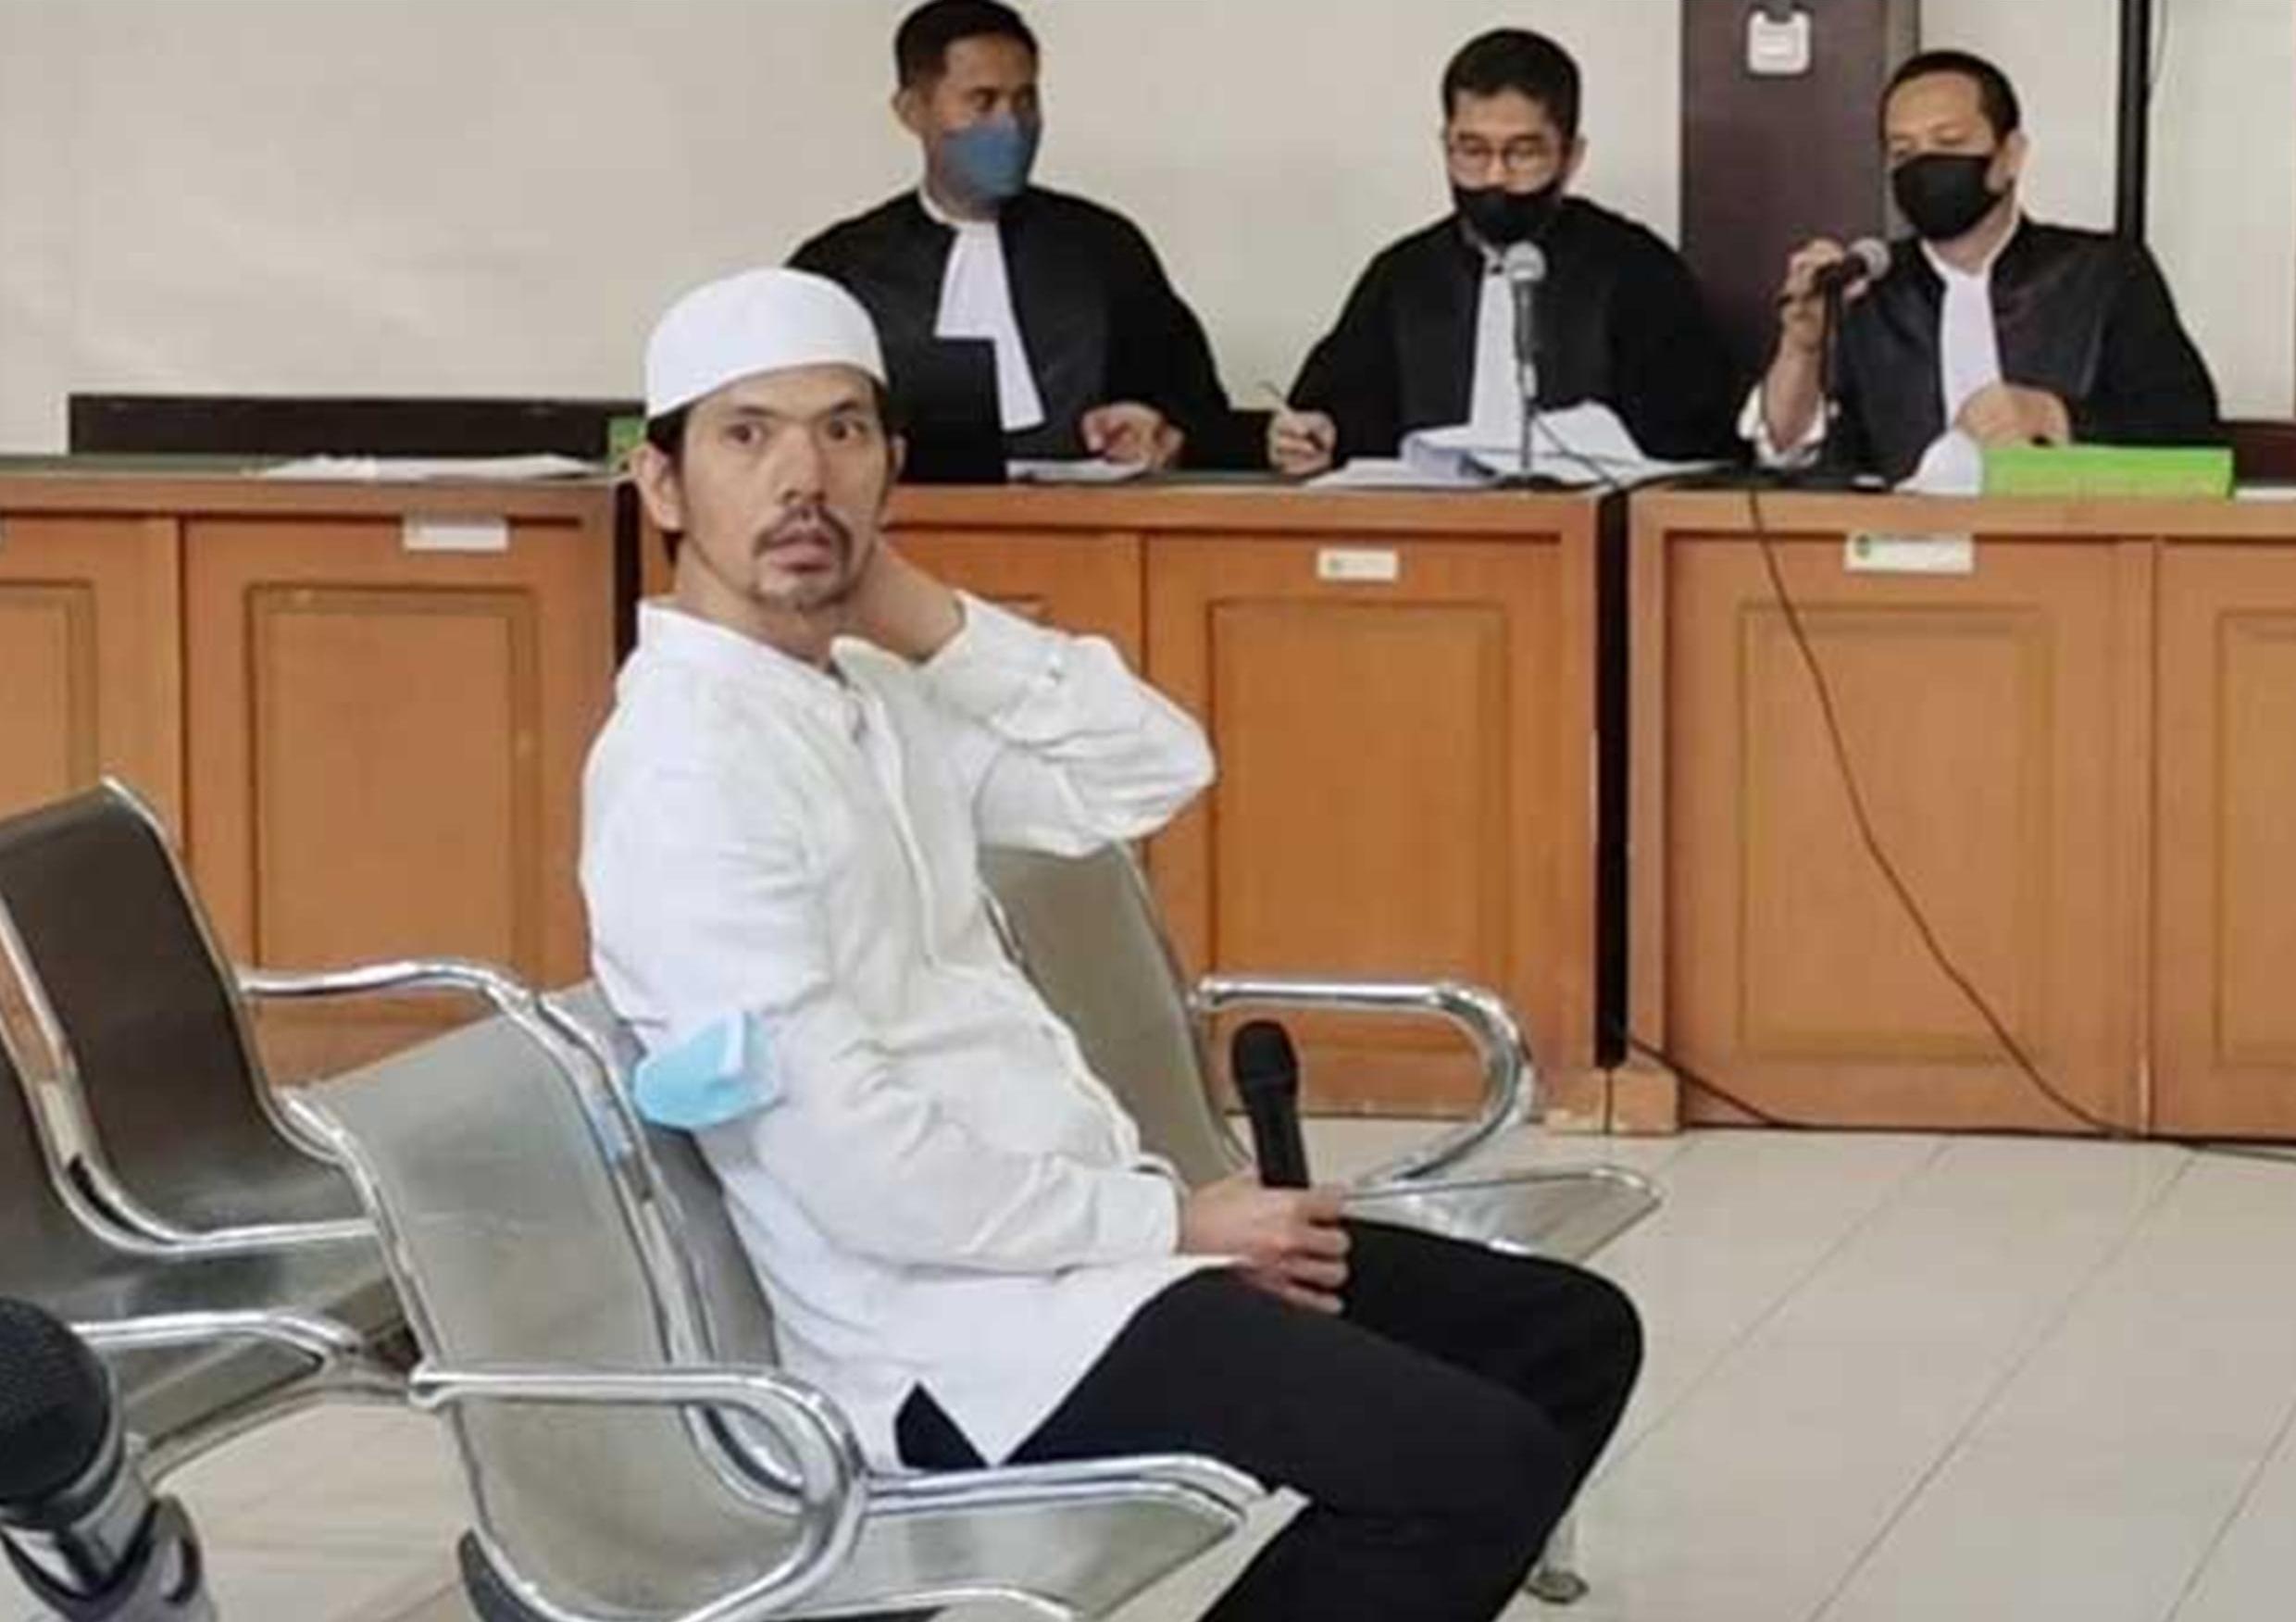 JPU Tuntut AKBP Dalizon 4 Tahun Penjara